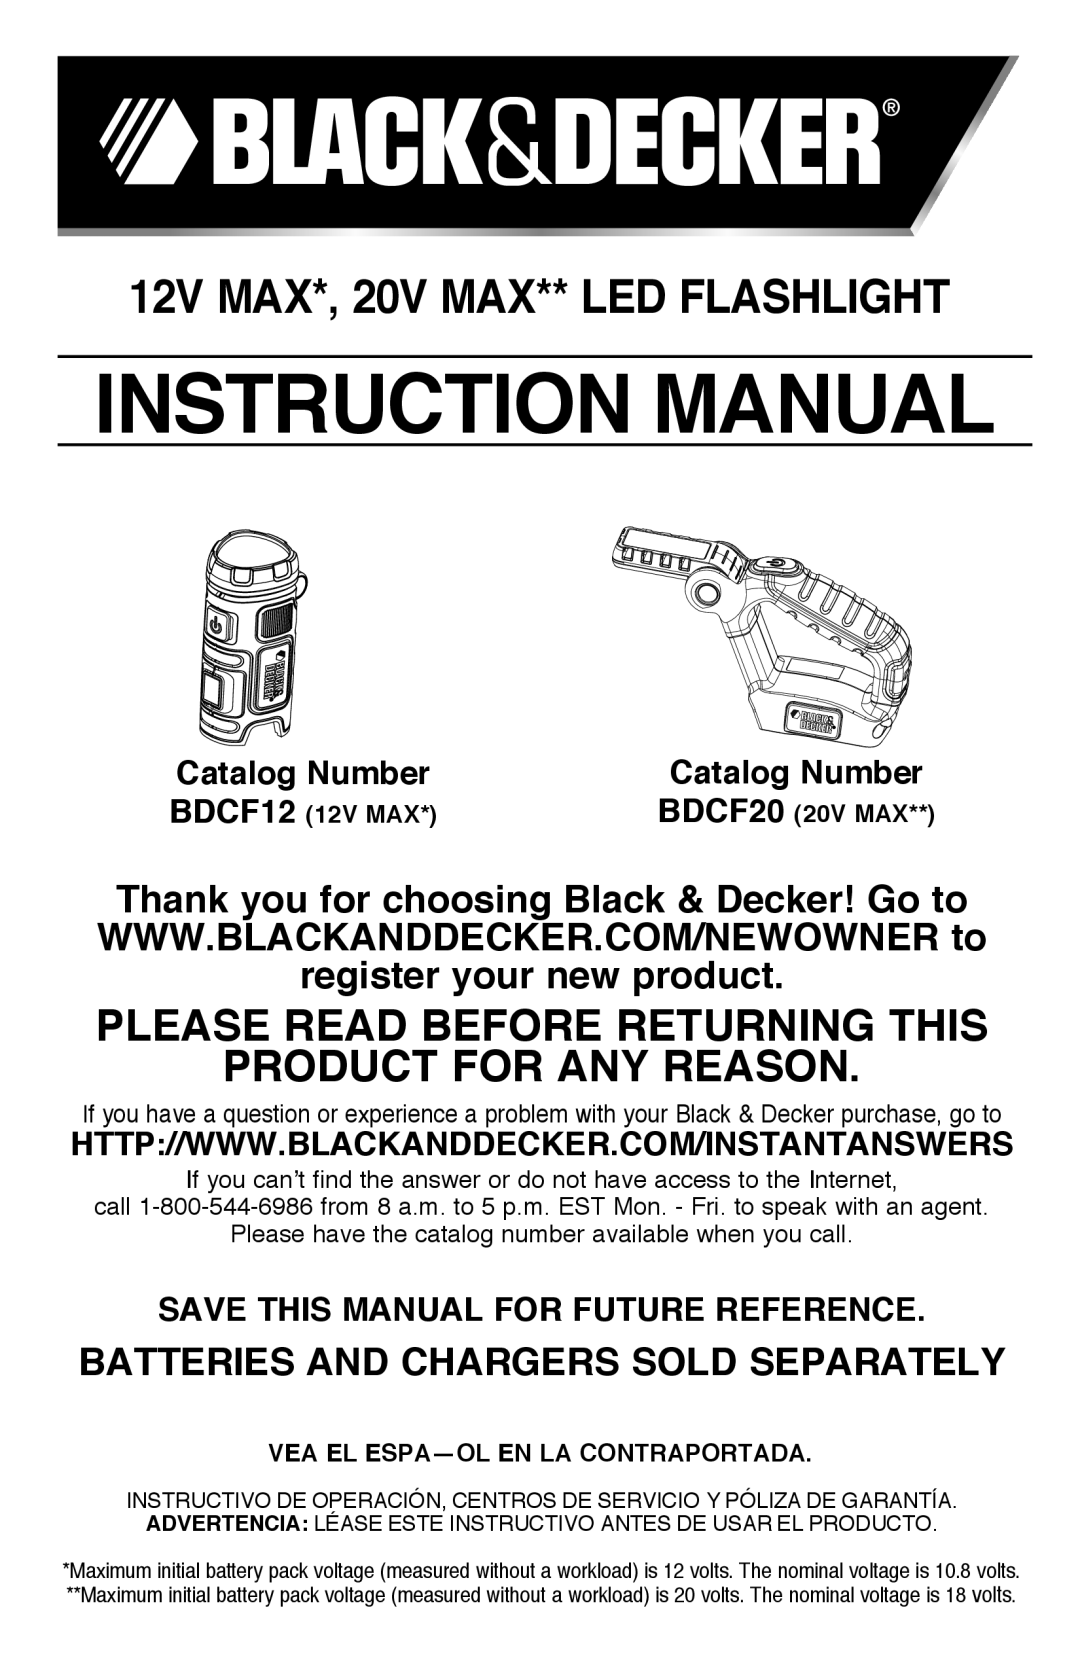 Black & Decker BDCF12 manual 12v Max*, 20v max** LED FLASHLIGHT, Batteries and chargers sold separately, Catalog Number 